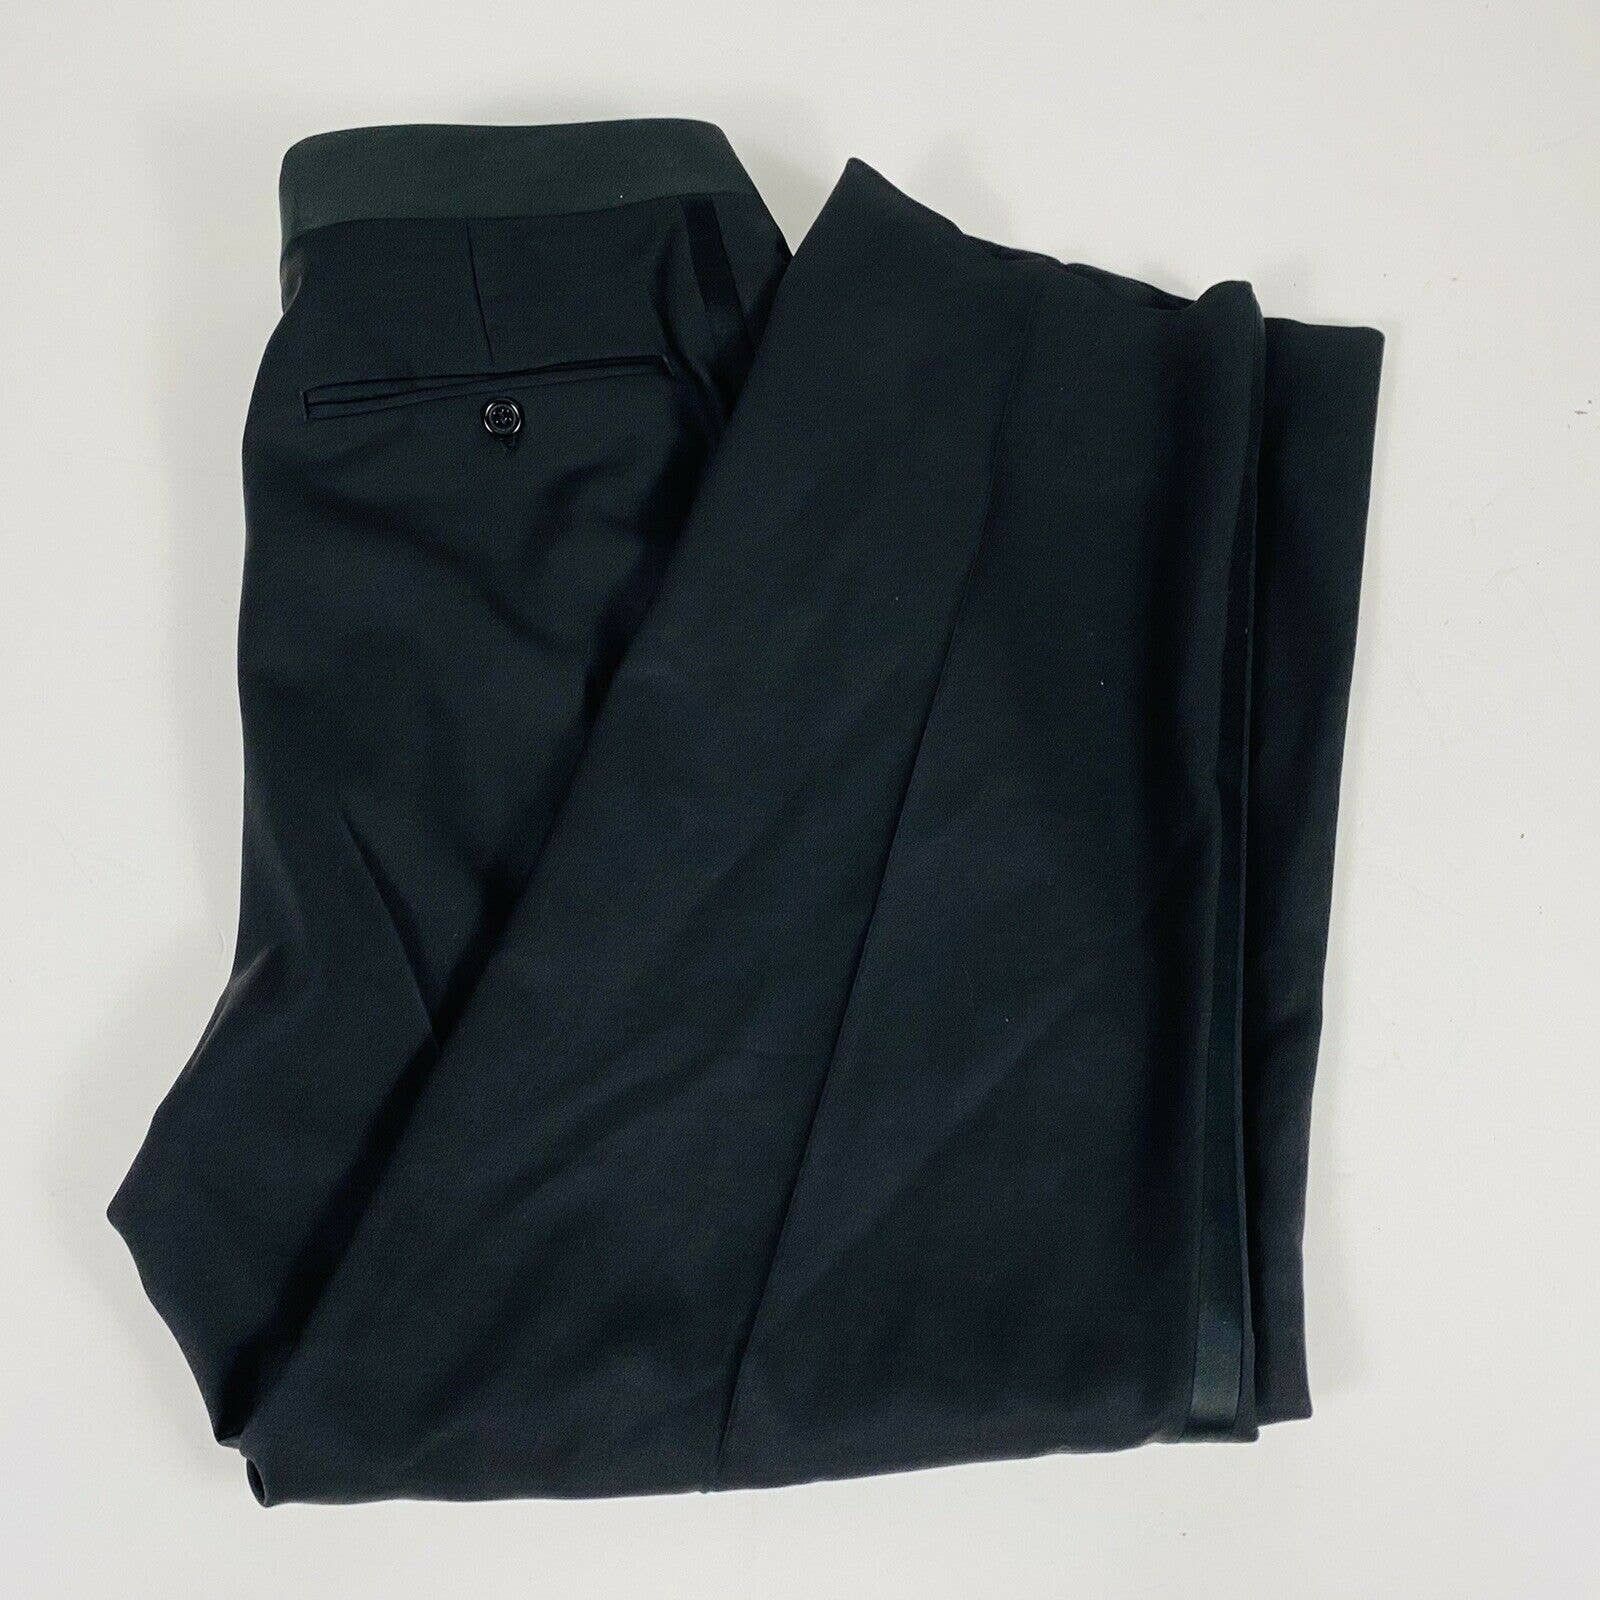 Canali Canali 32 x 27 Tuxedo Pant Black Striped 100% Wool | Grailed